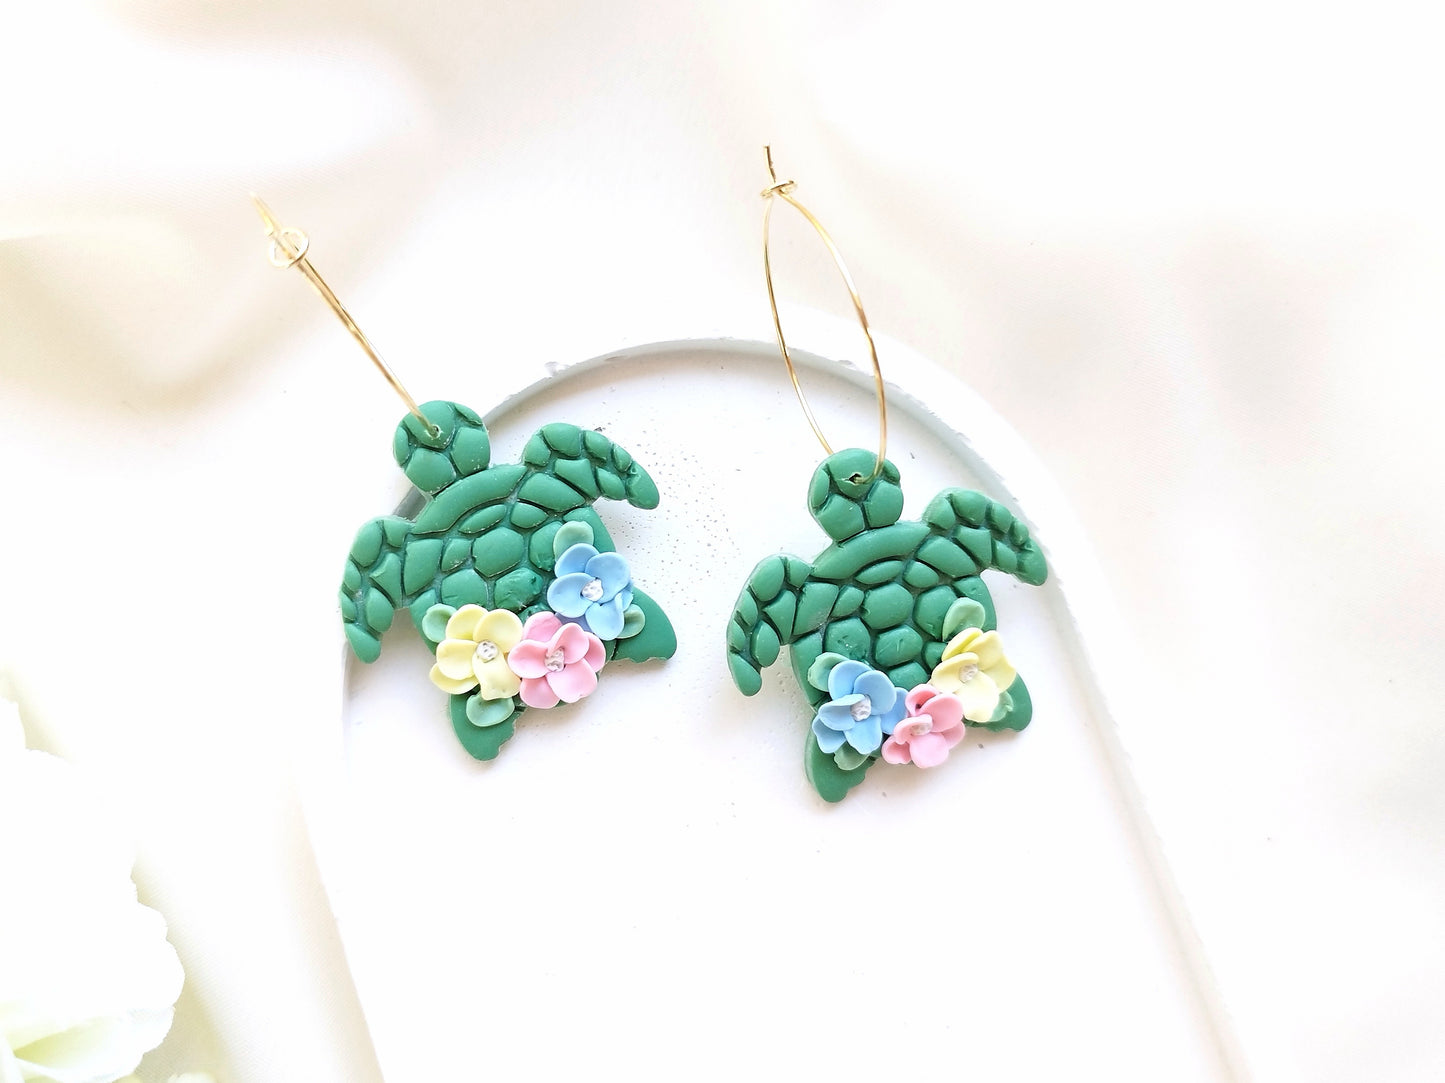 Turtle polymer clay earrings, japanese kawaii earrings, fun funky weird handmade cottagecore, cute anime, novelty quirky unique earrings